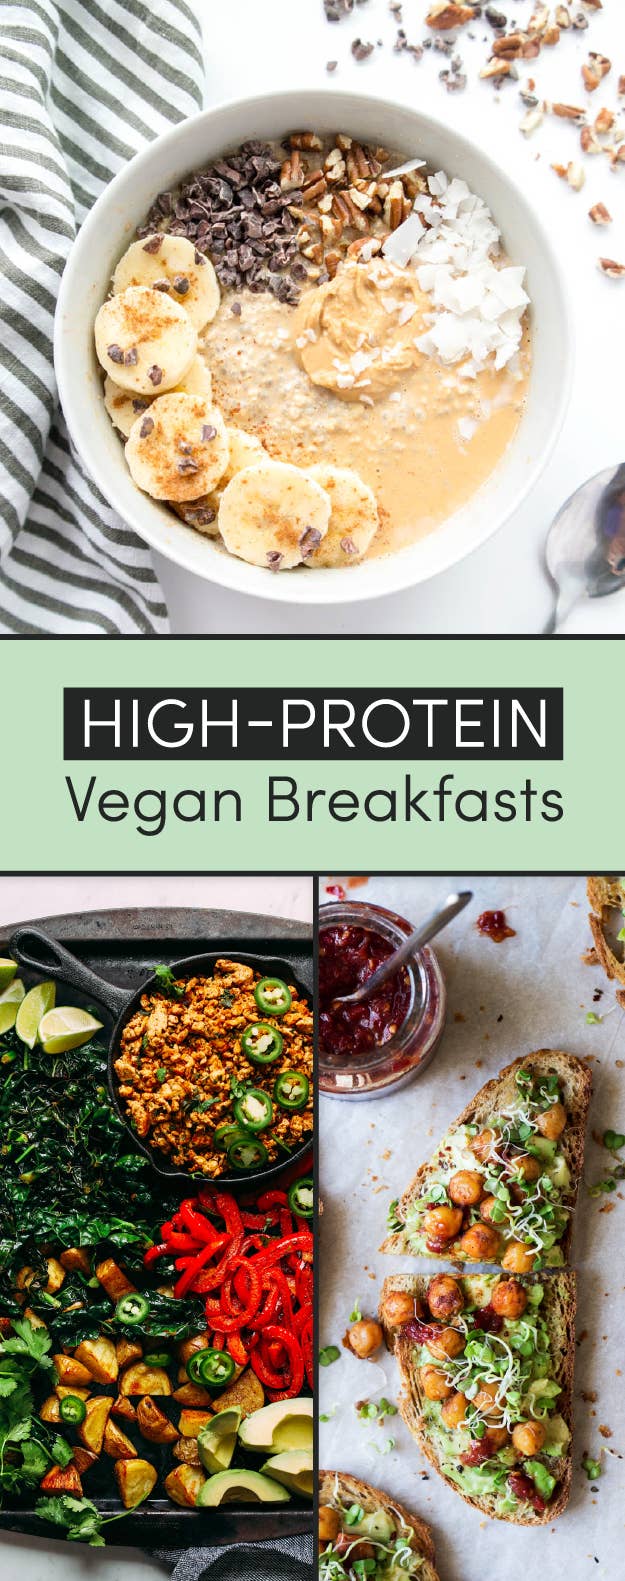 21 High-Protein Breakfasts Under 300 Calories